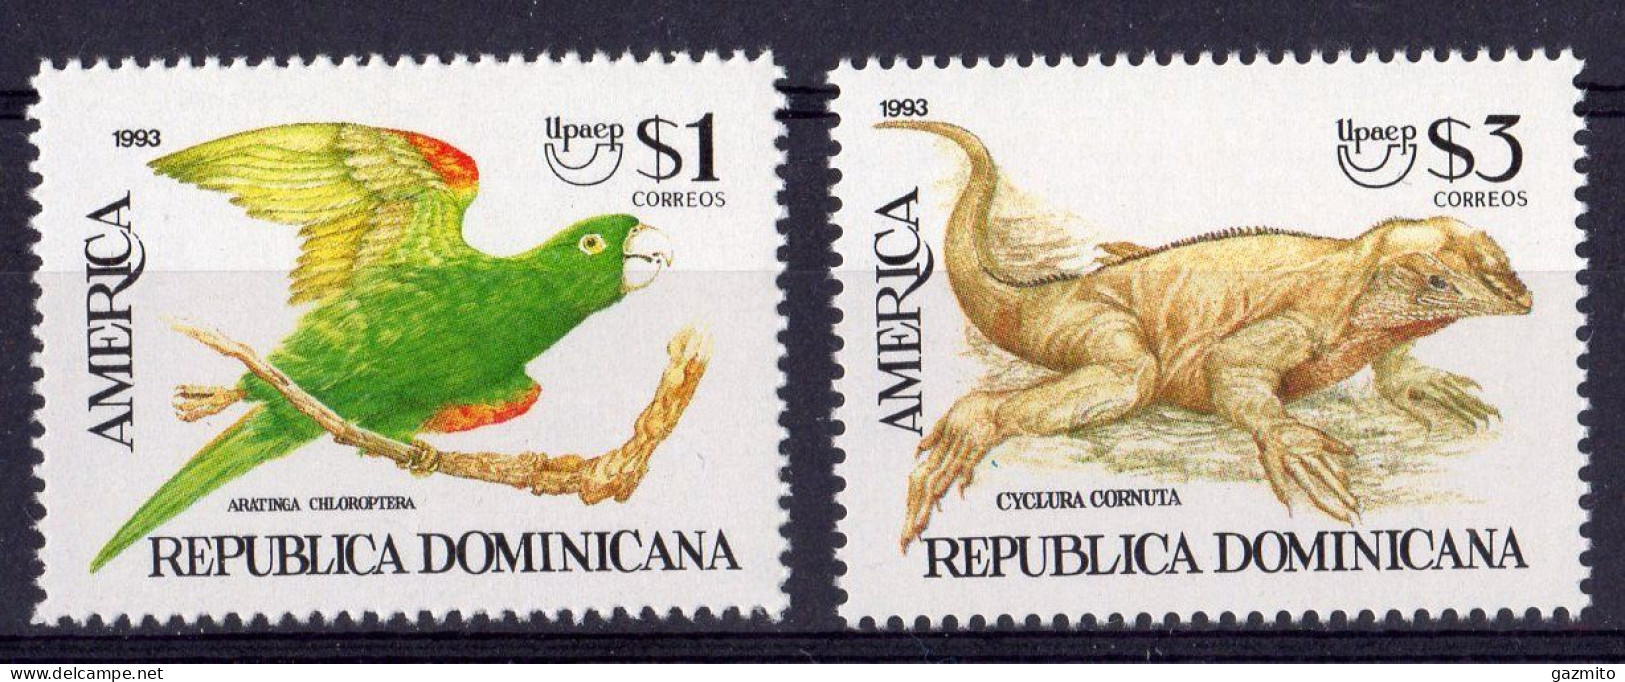 Dominicana 1993, UPAEP, Parrot, Iguana, 2val - UPU (Wereldpostunie)